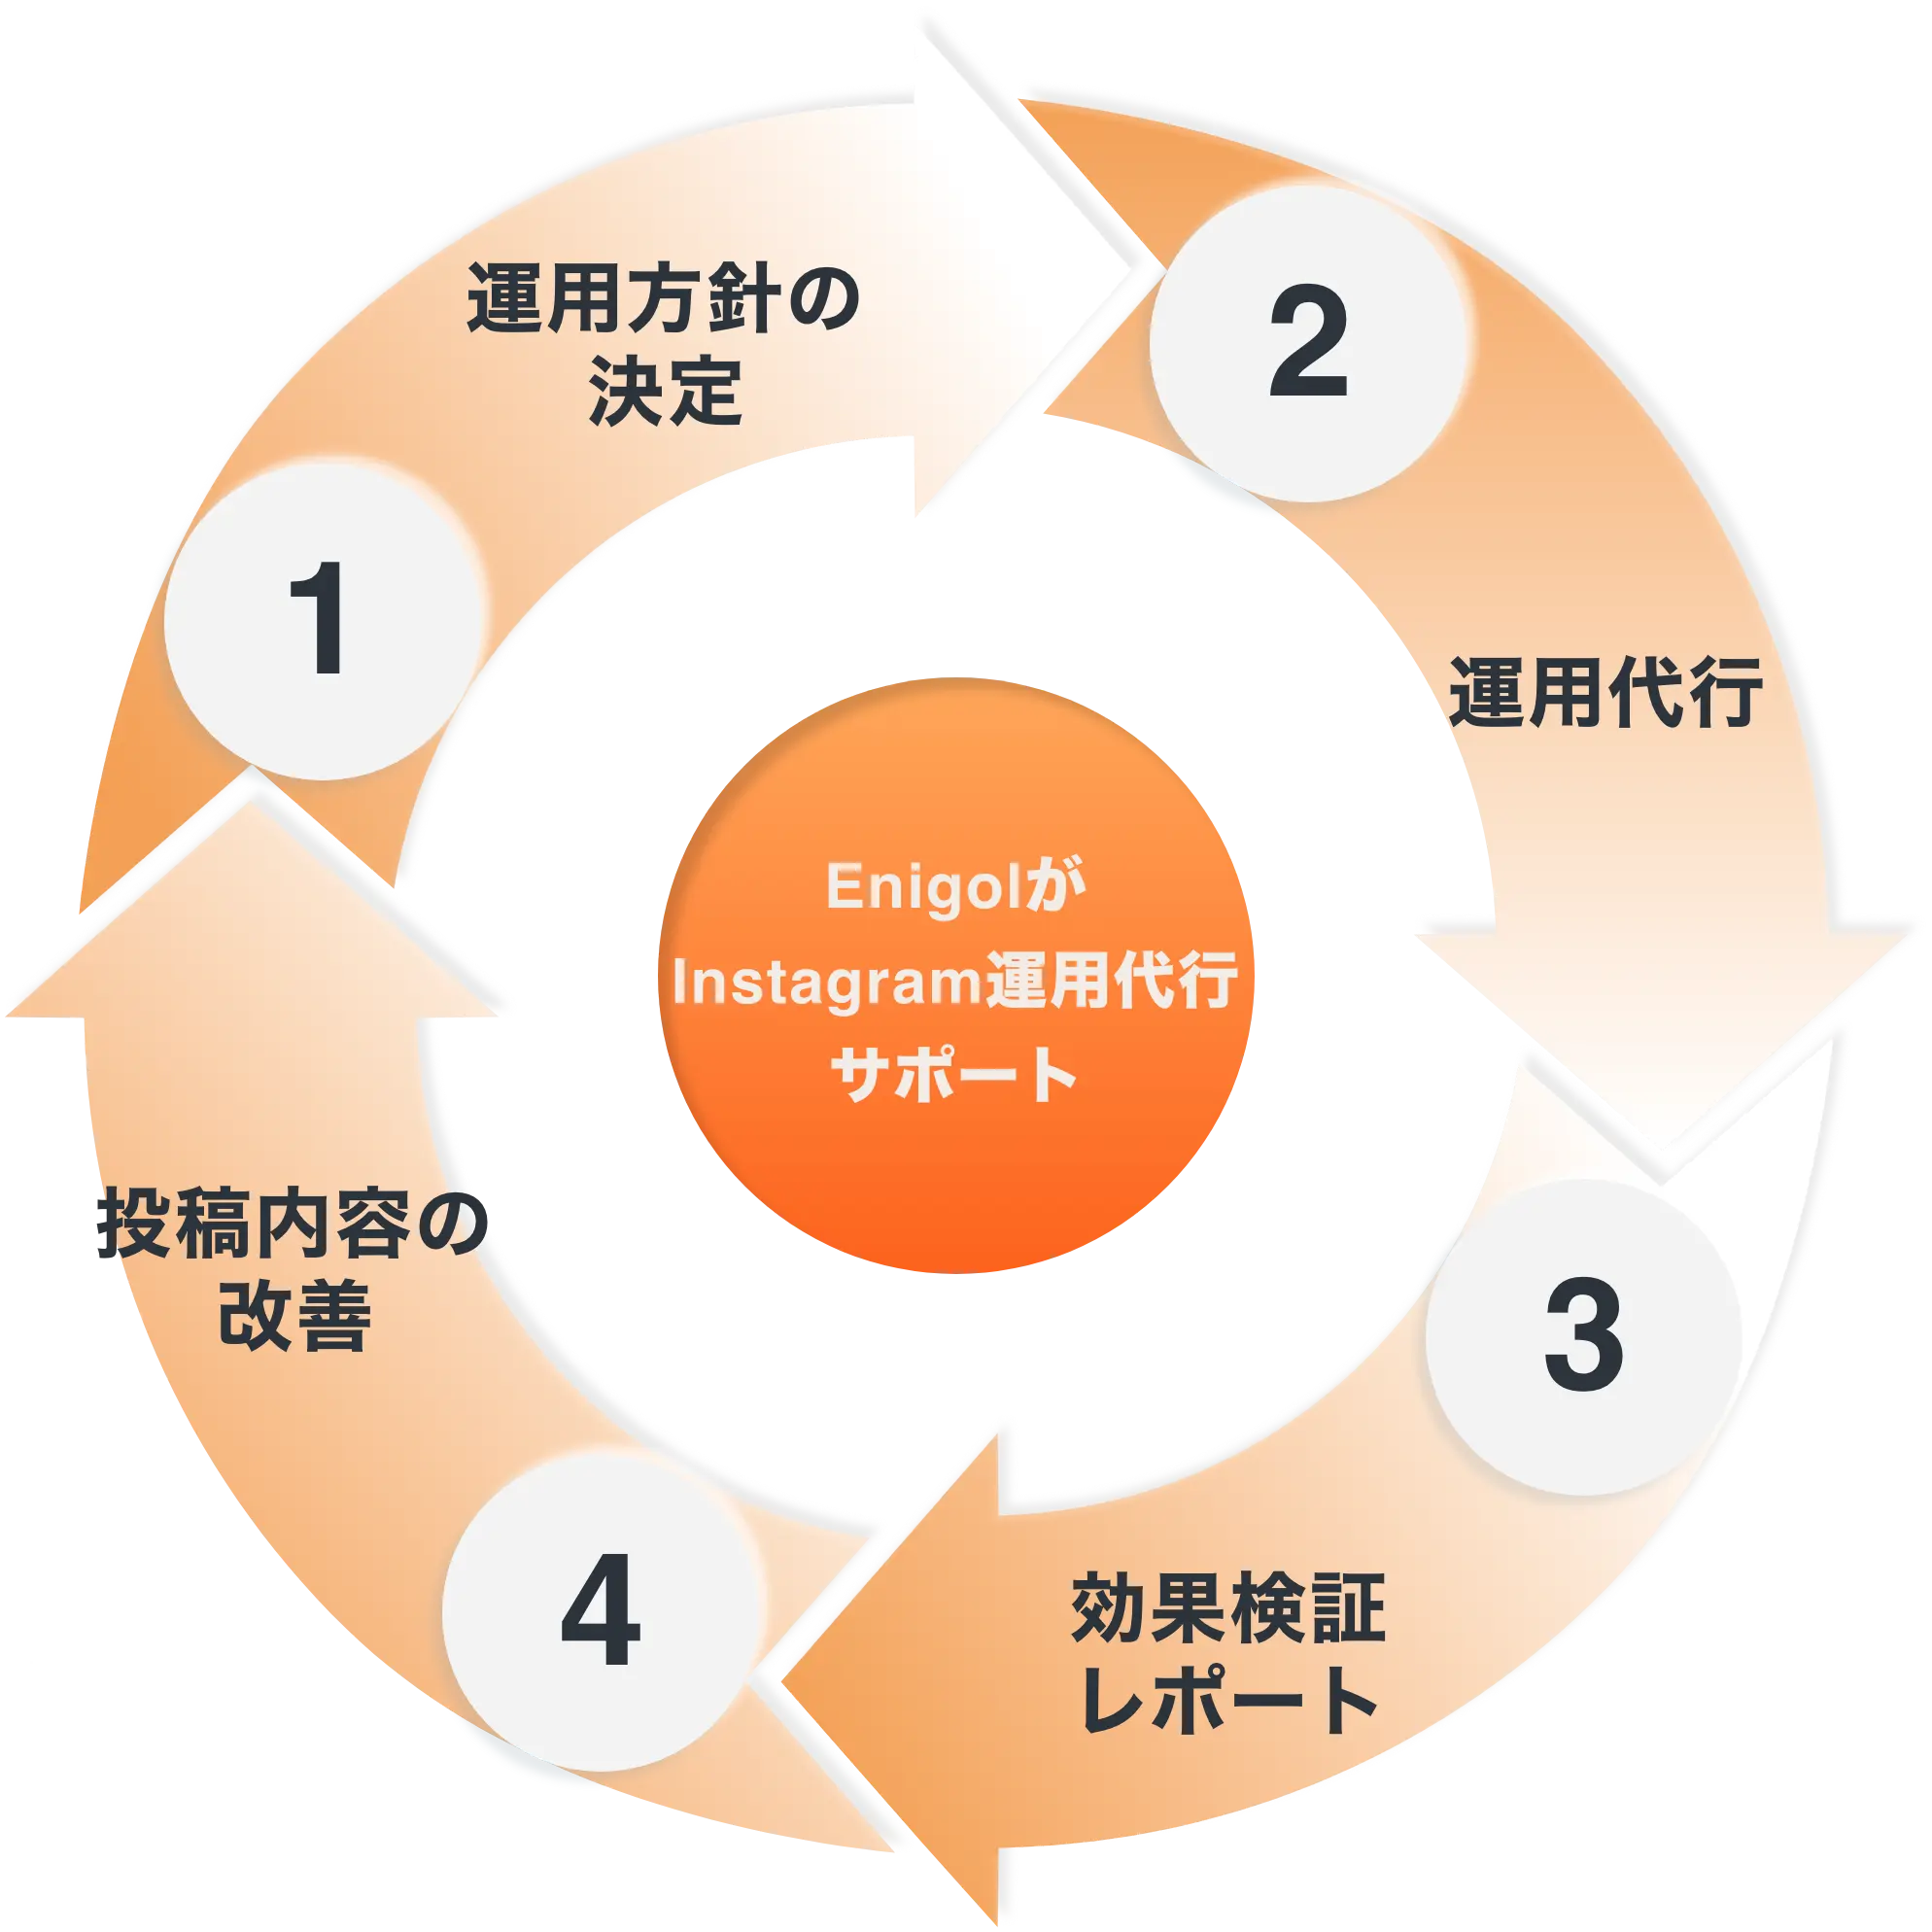 EnigolがInstagram運用代行するサイクル:①運用方針の決定、②運用代行、③効果検証レポート、④投稿内容の改善